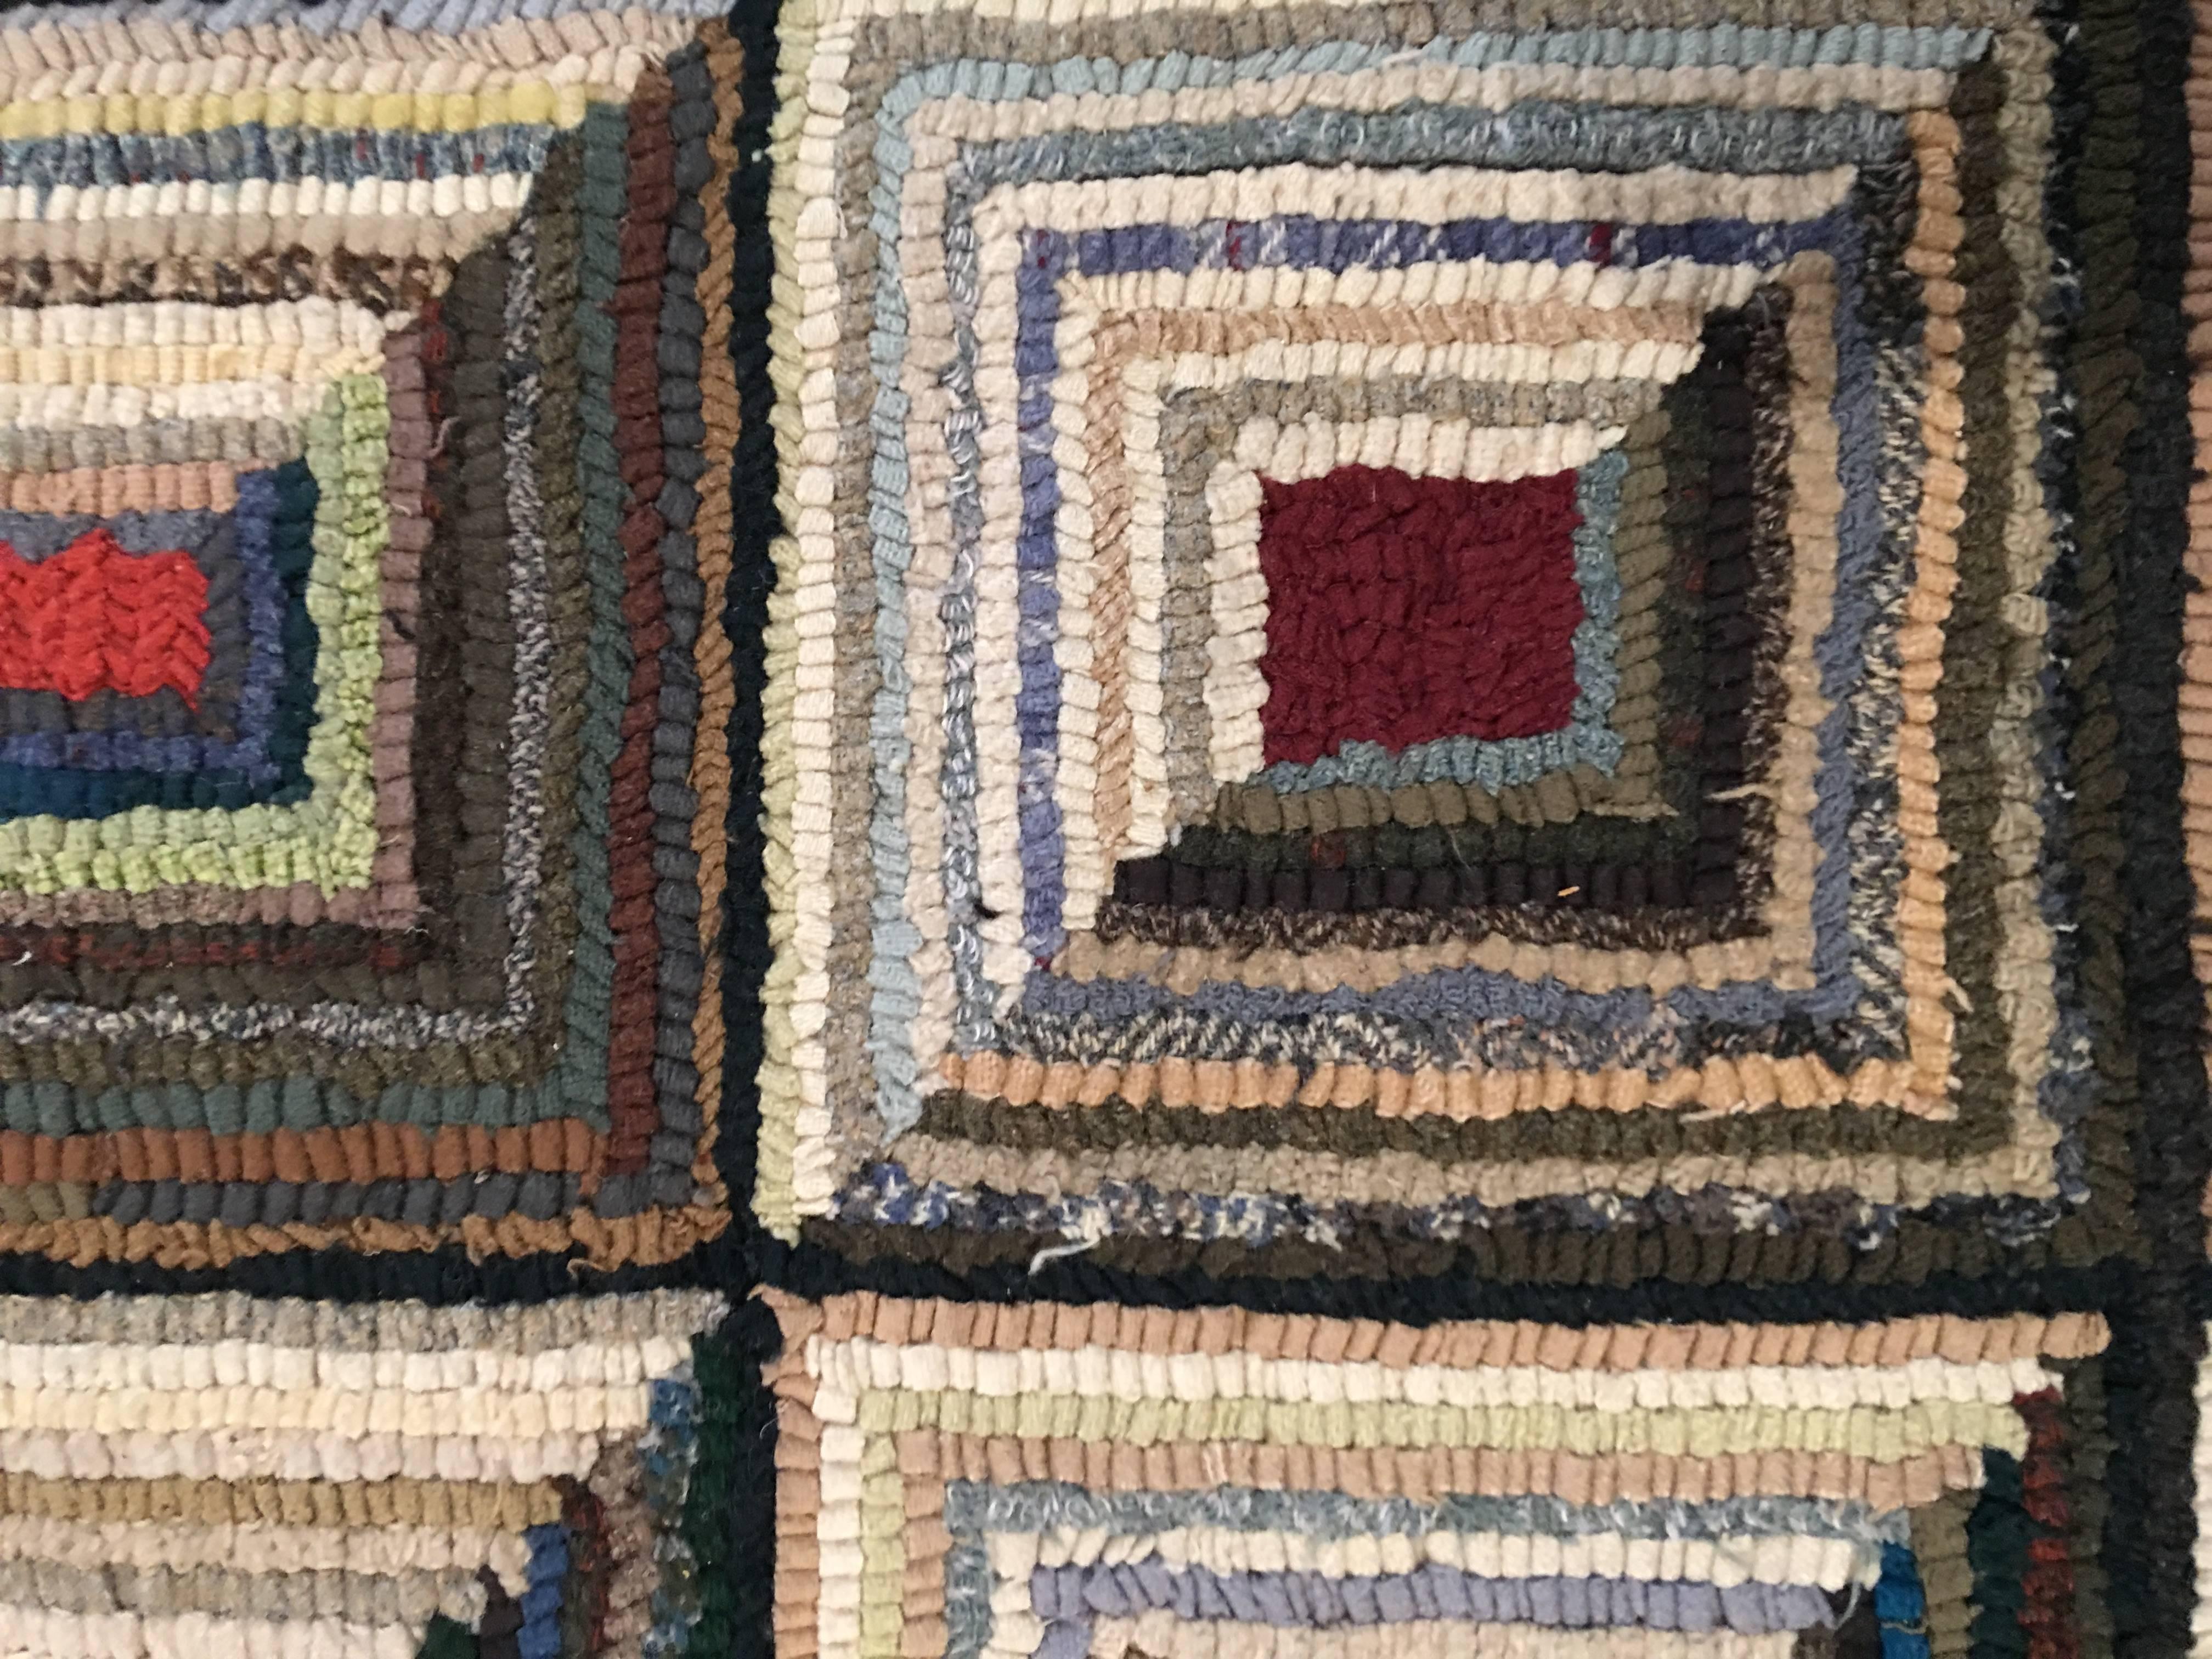 American handmade rug by Stephen T. Anderson. Wool on linen.